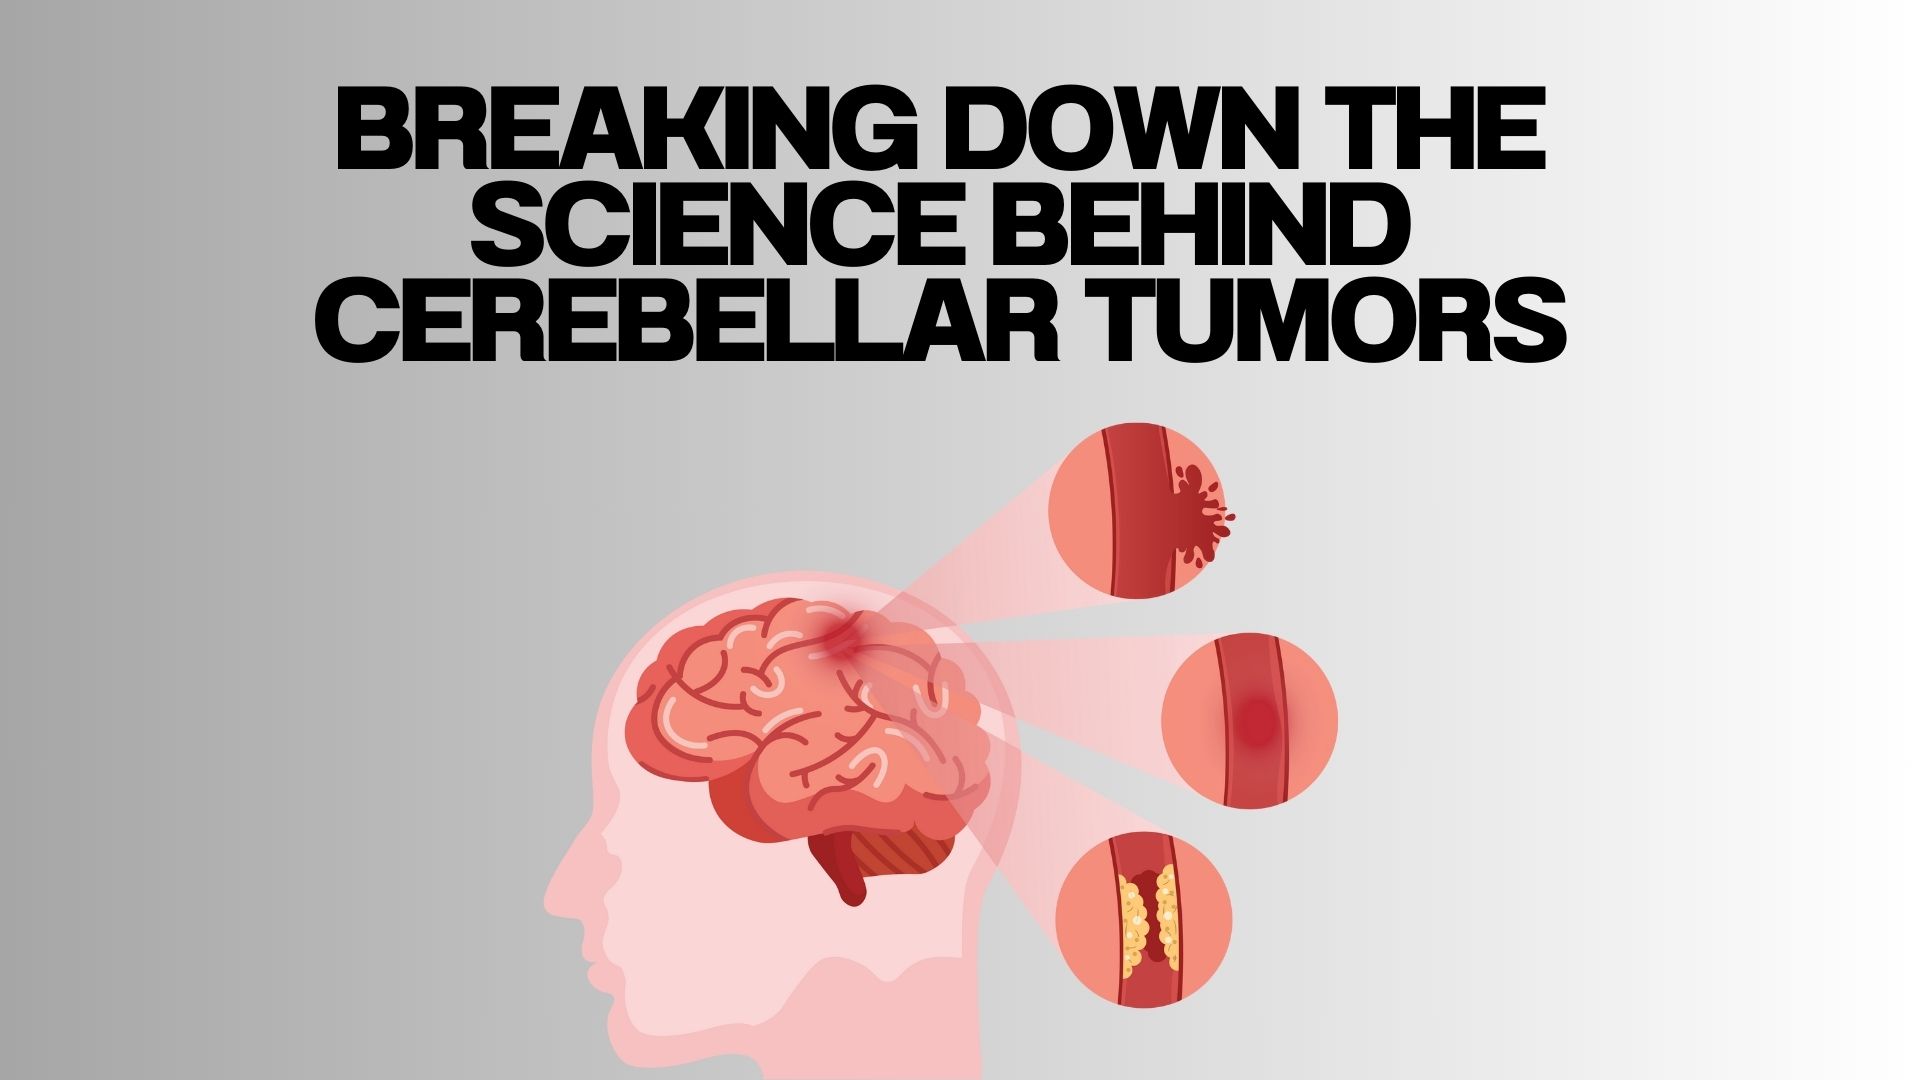 Breaking down the science behind cerebellar tumors